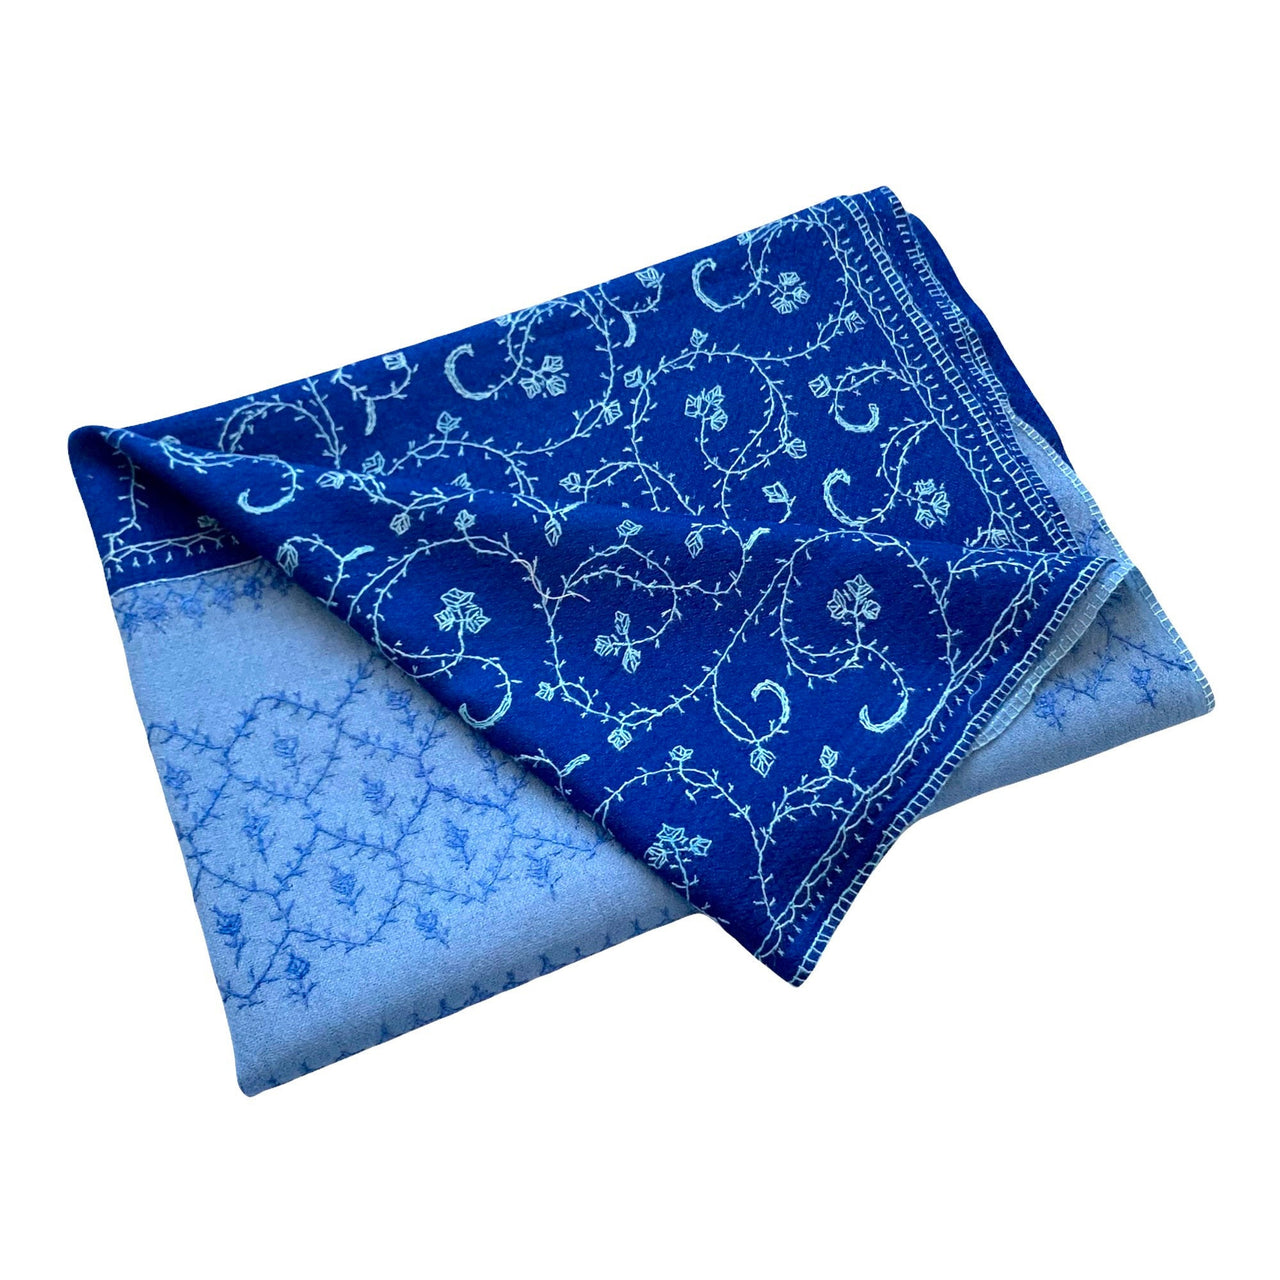 Stunning Pal kalam Blue Hand Embroidered Cashmere Pashmina Shawl Scarf Wrap Stole